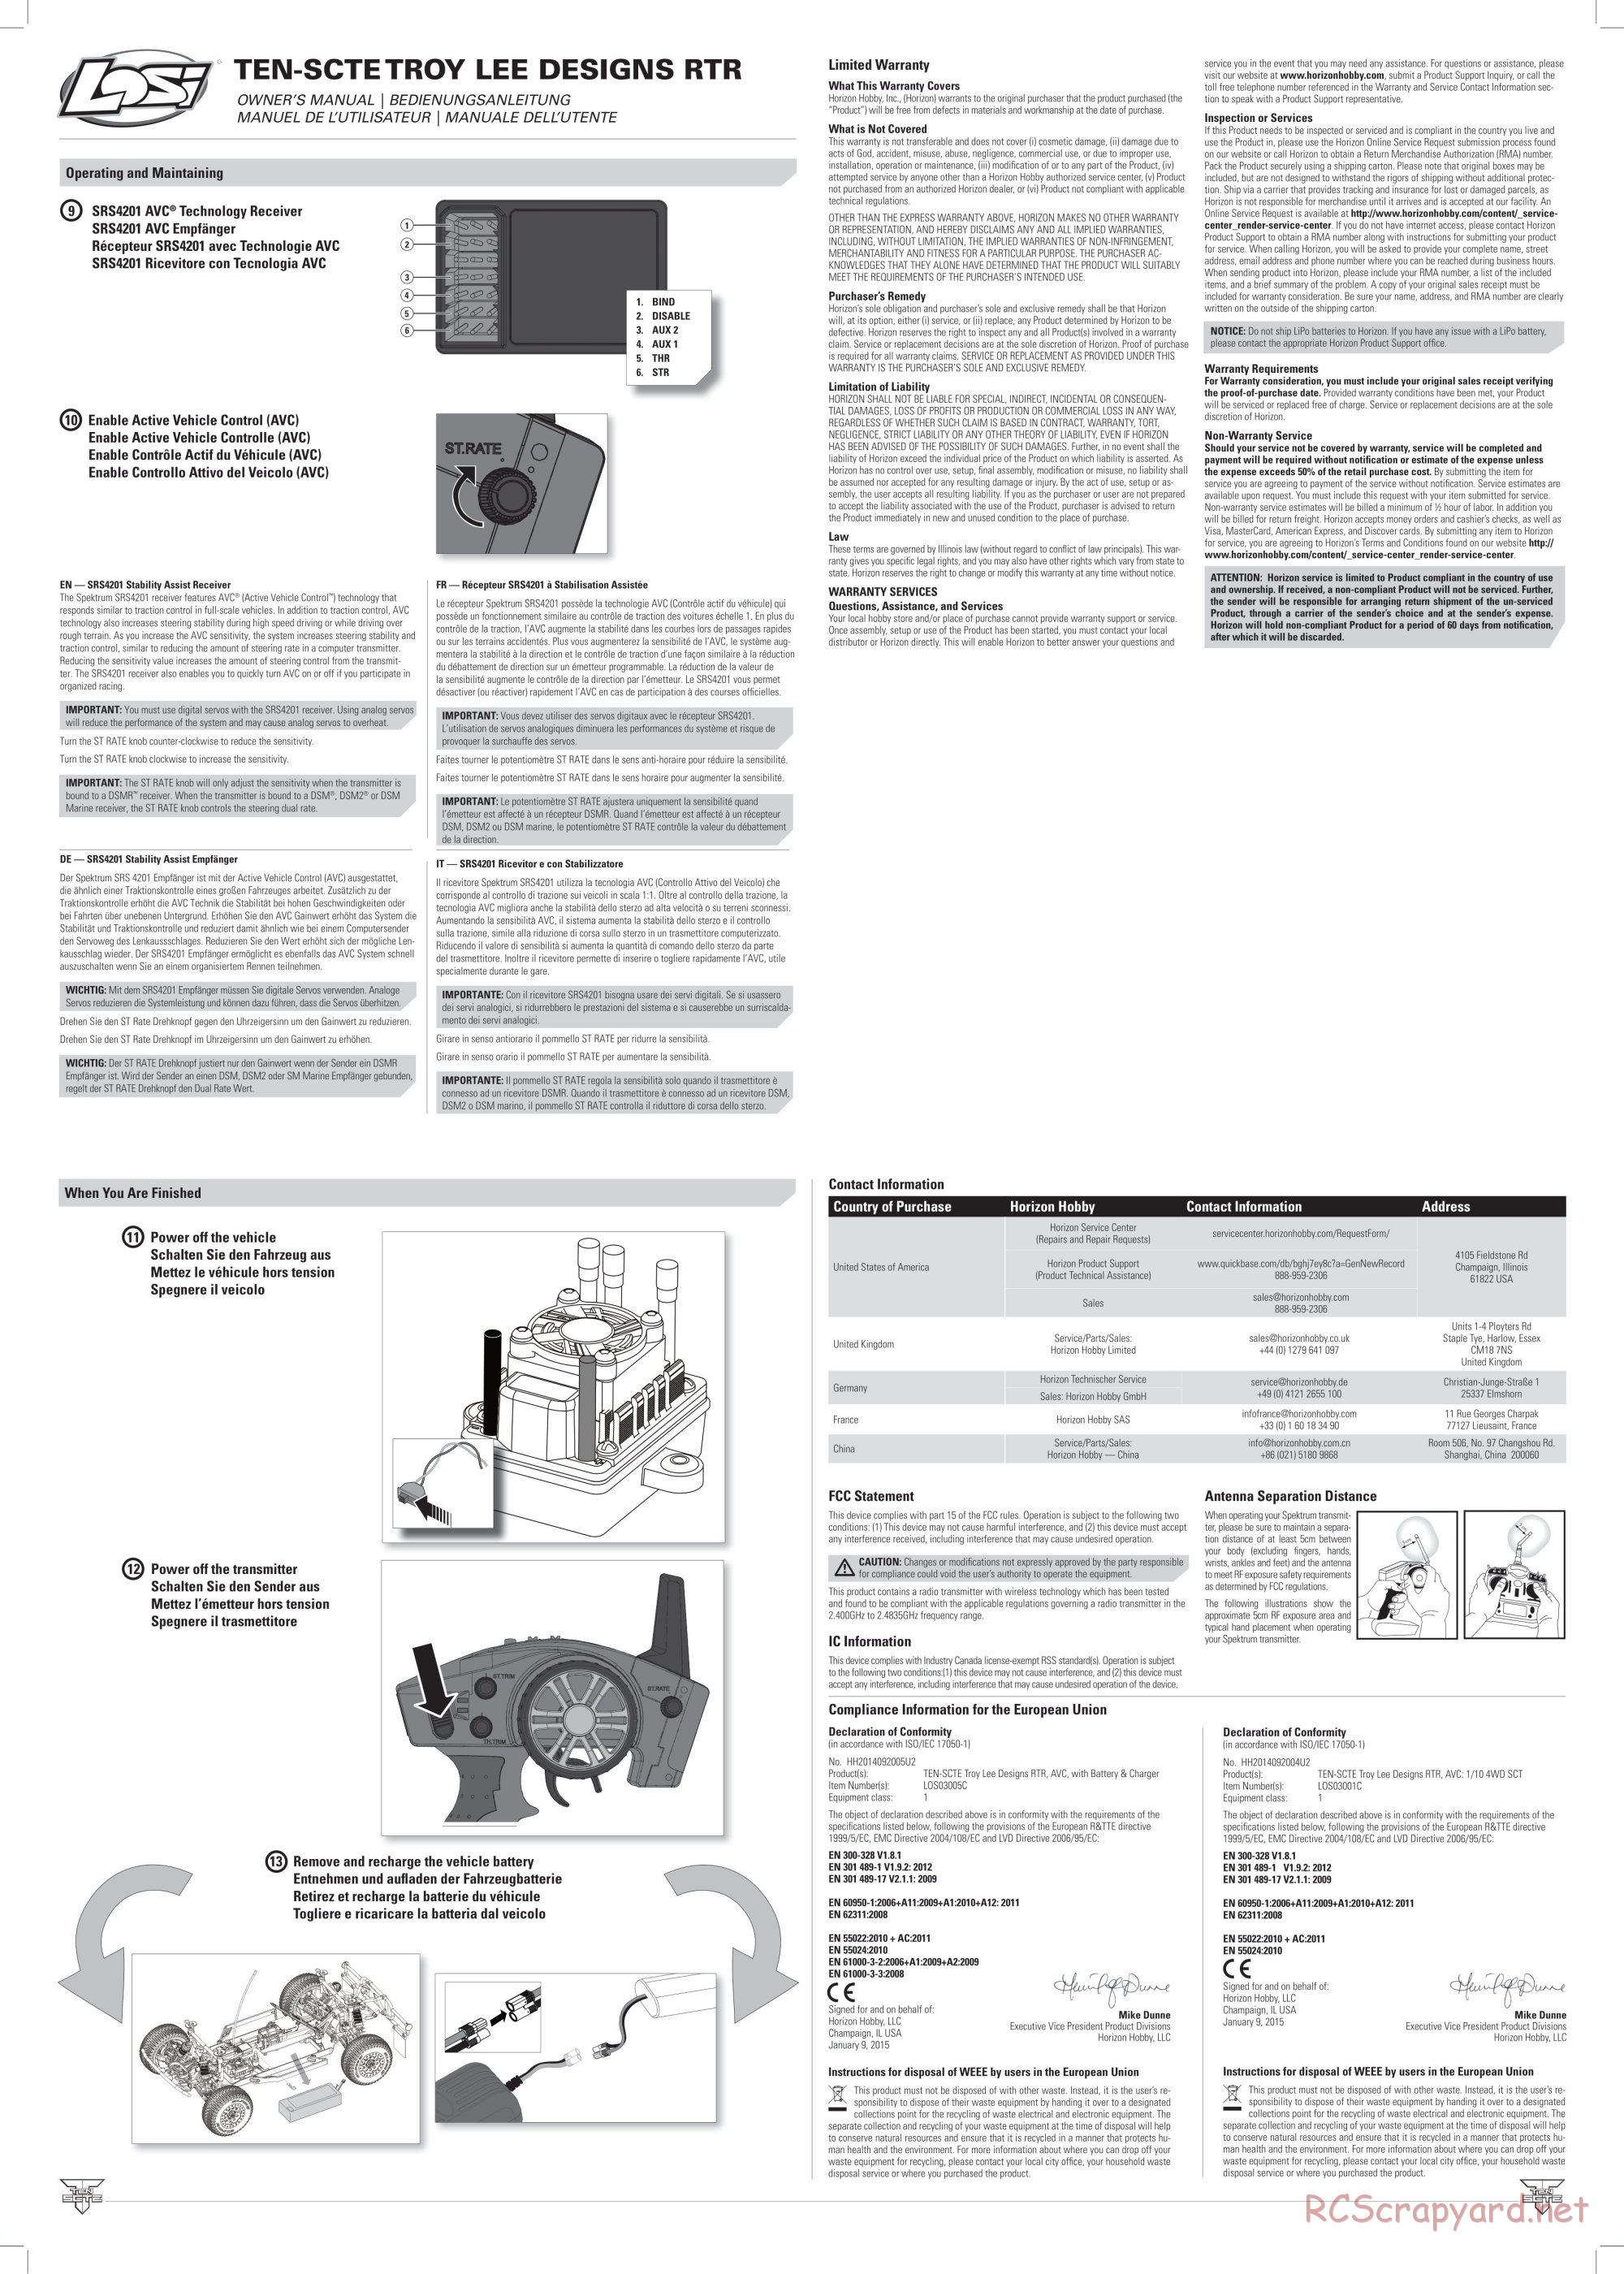 Team Losi - Ten-SCTE Troy Lee Designs - Manual - Page 3